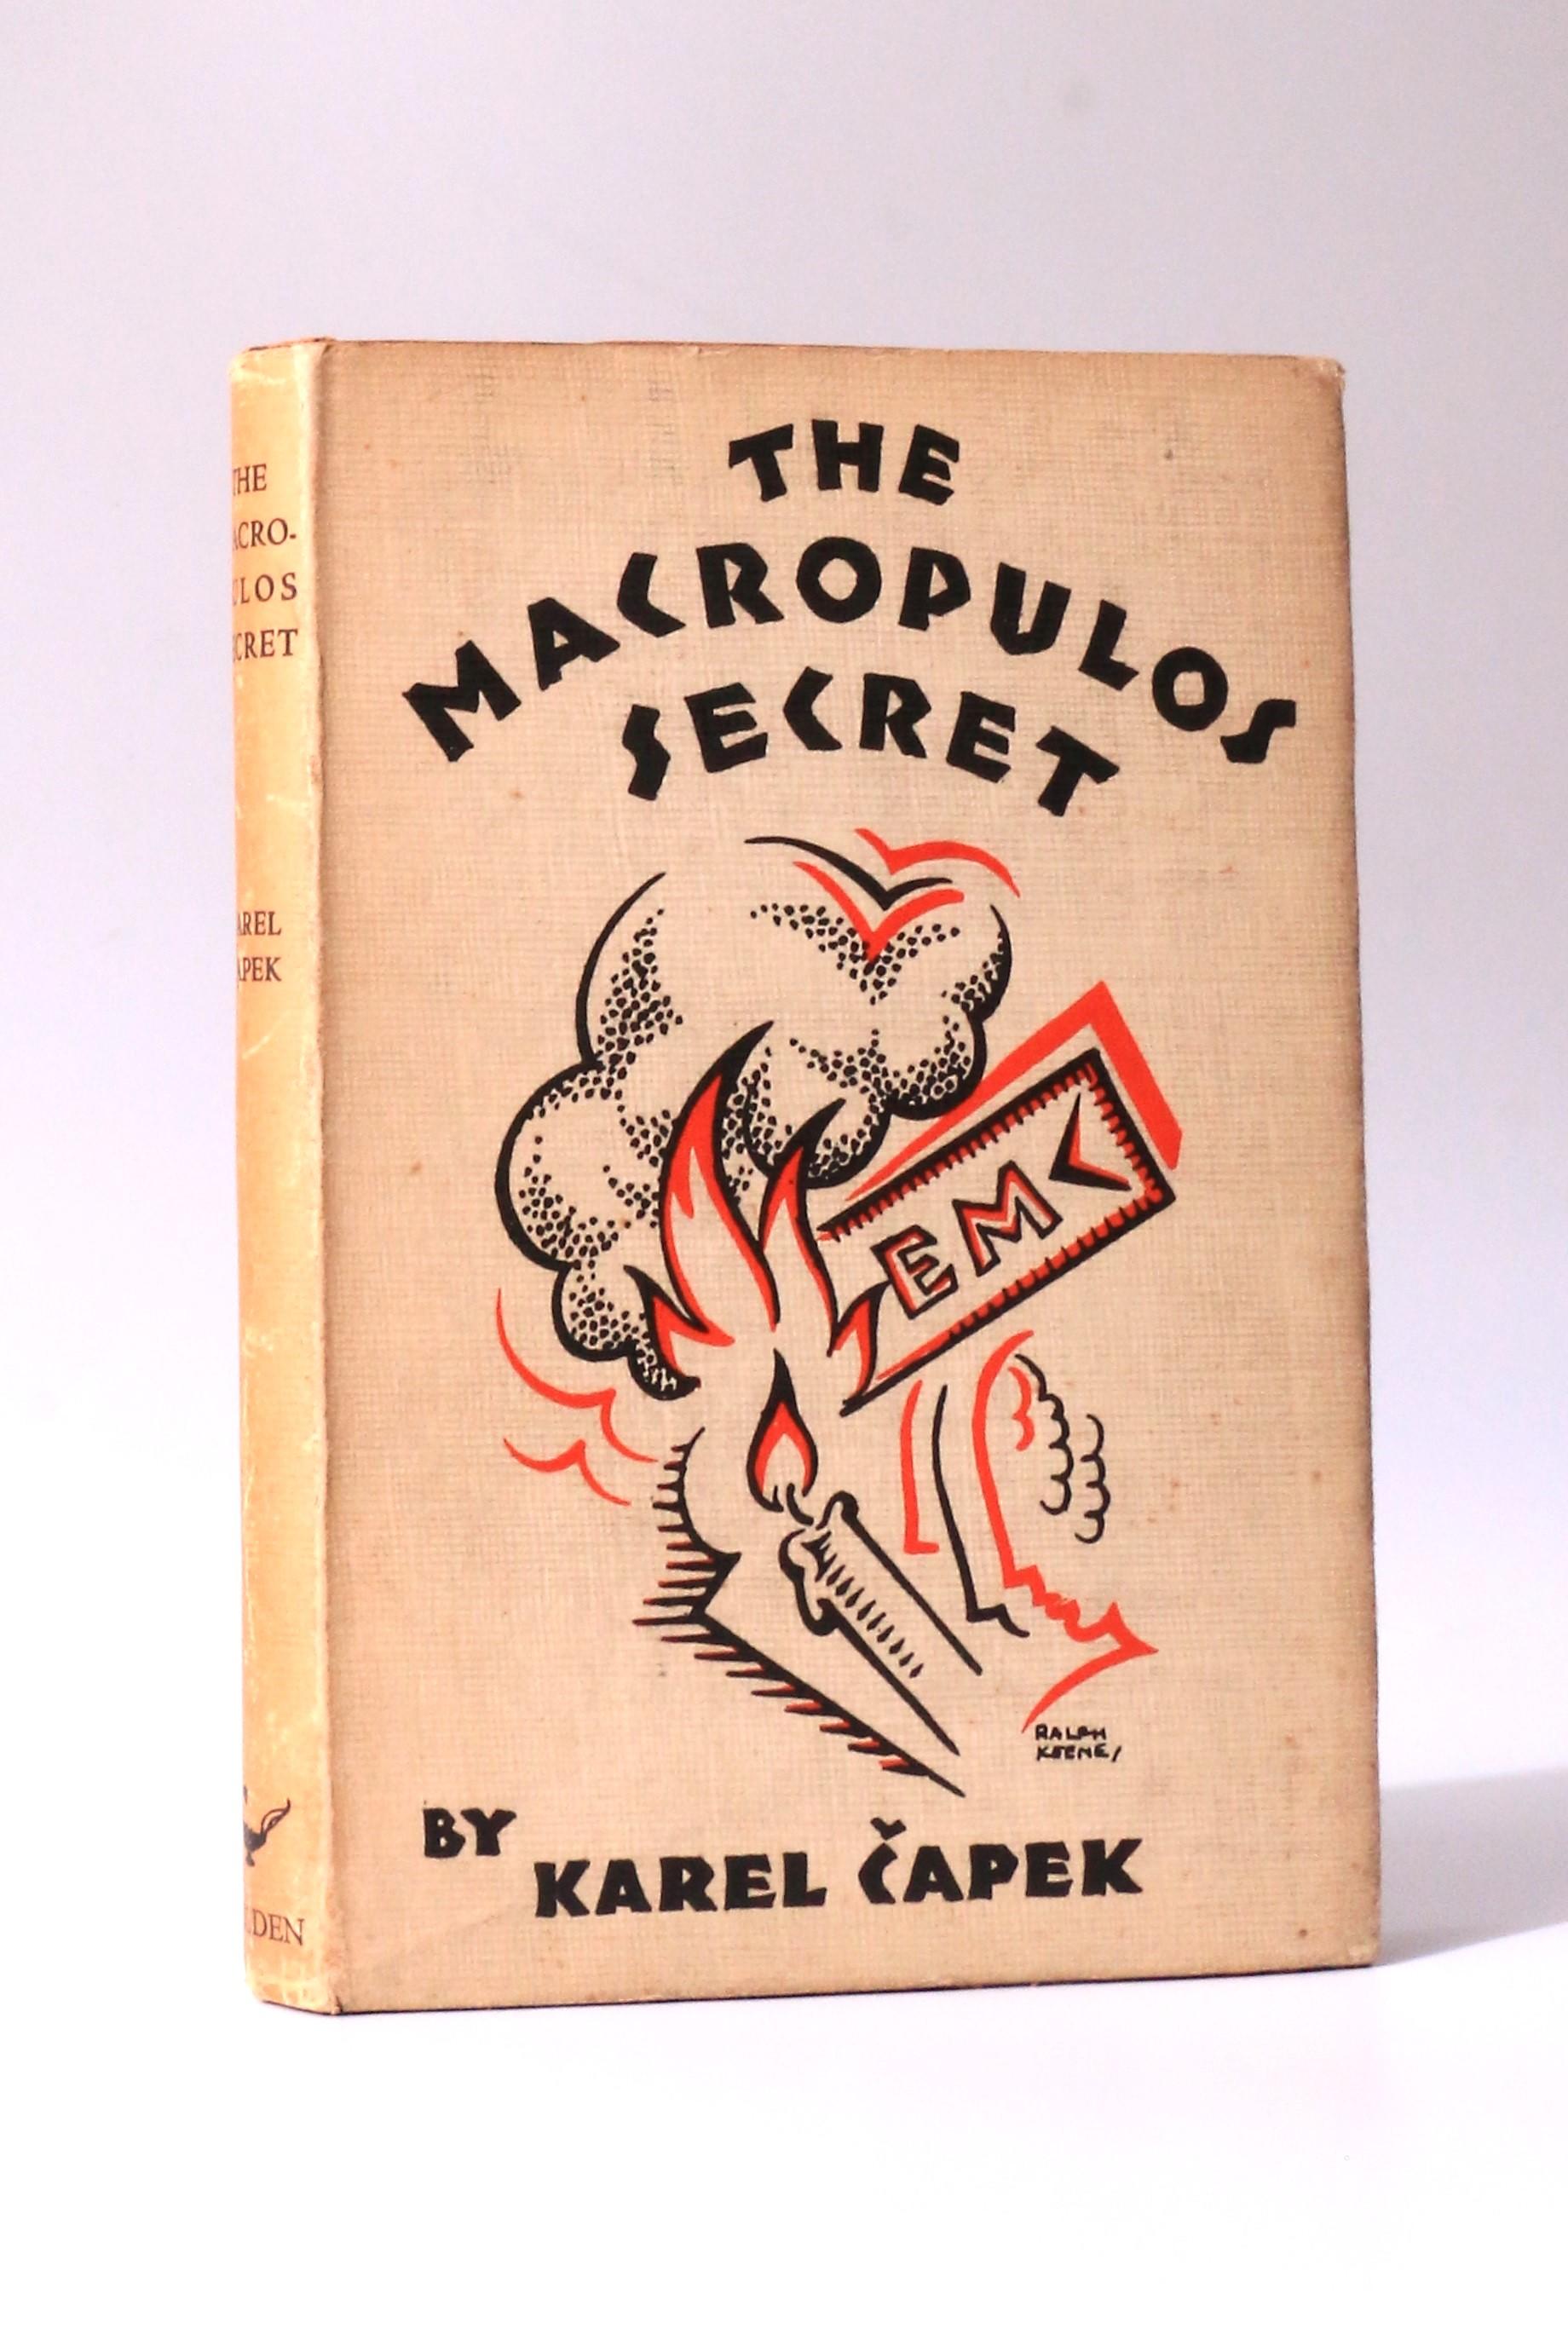 Karel Capek - The Macropulos Secret - Robert Holden, 1927, First Edition.